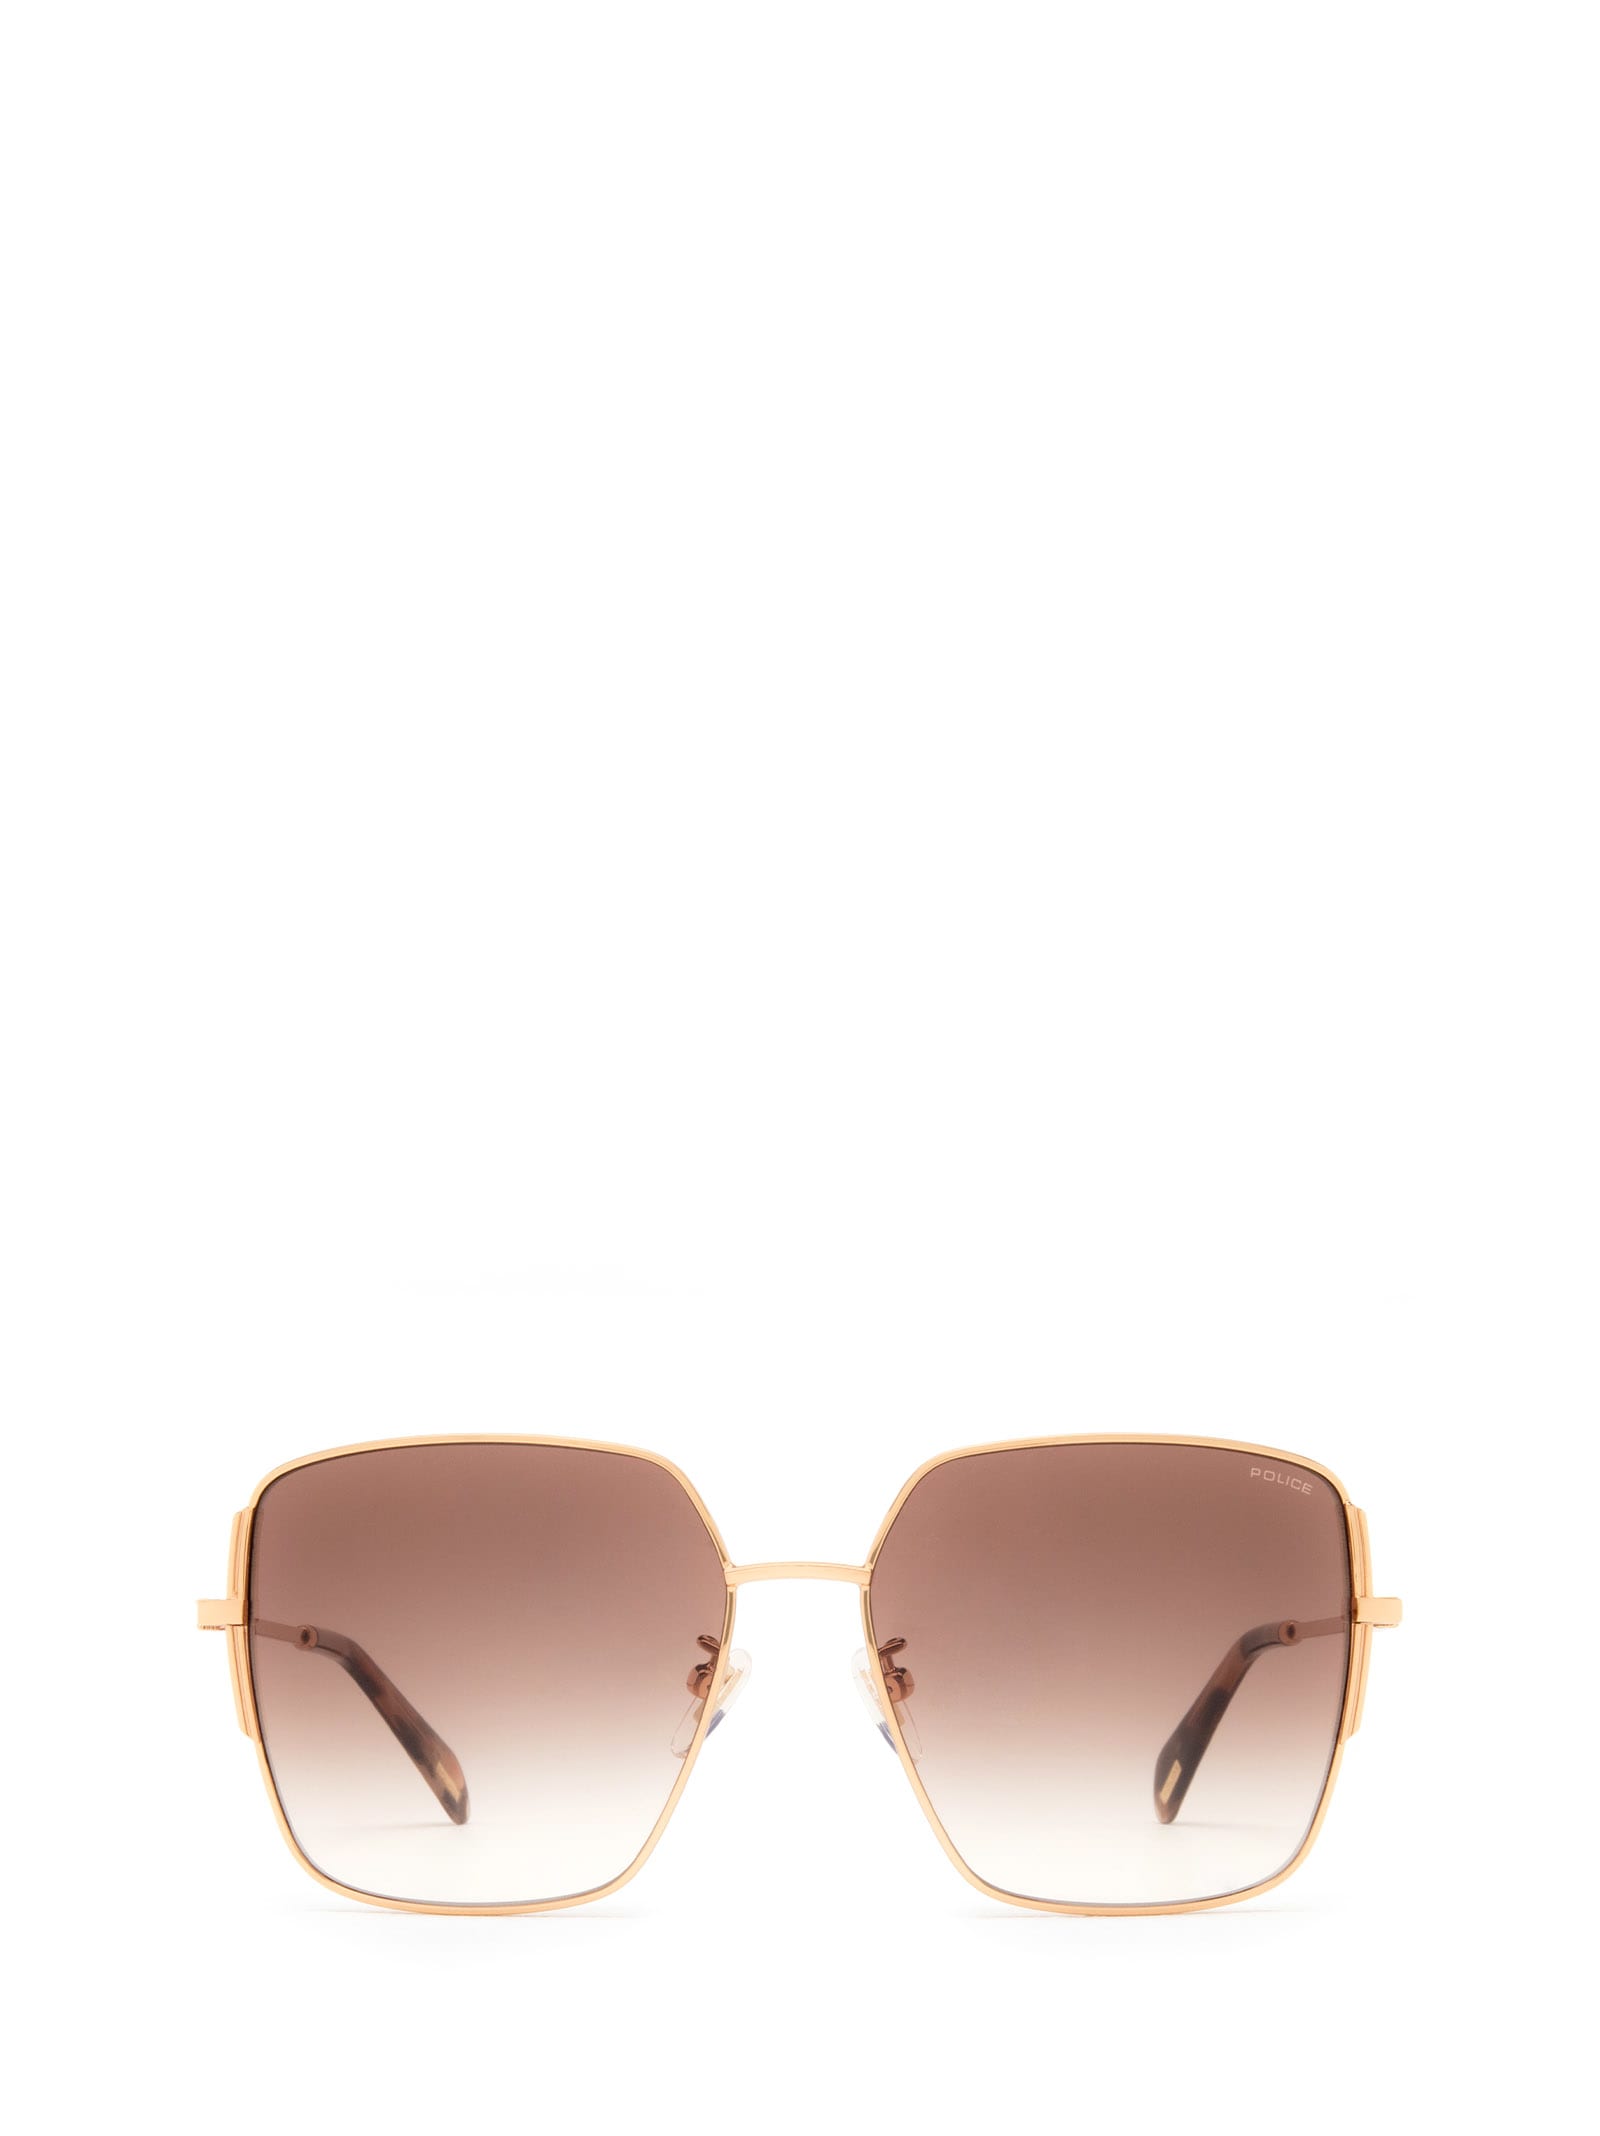 Splf34 Copper Gold Sunglasses